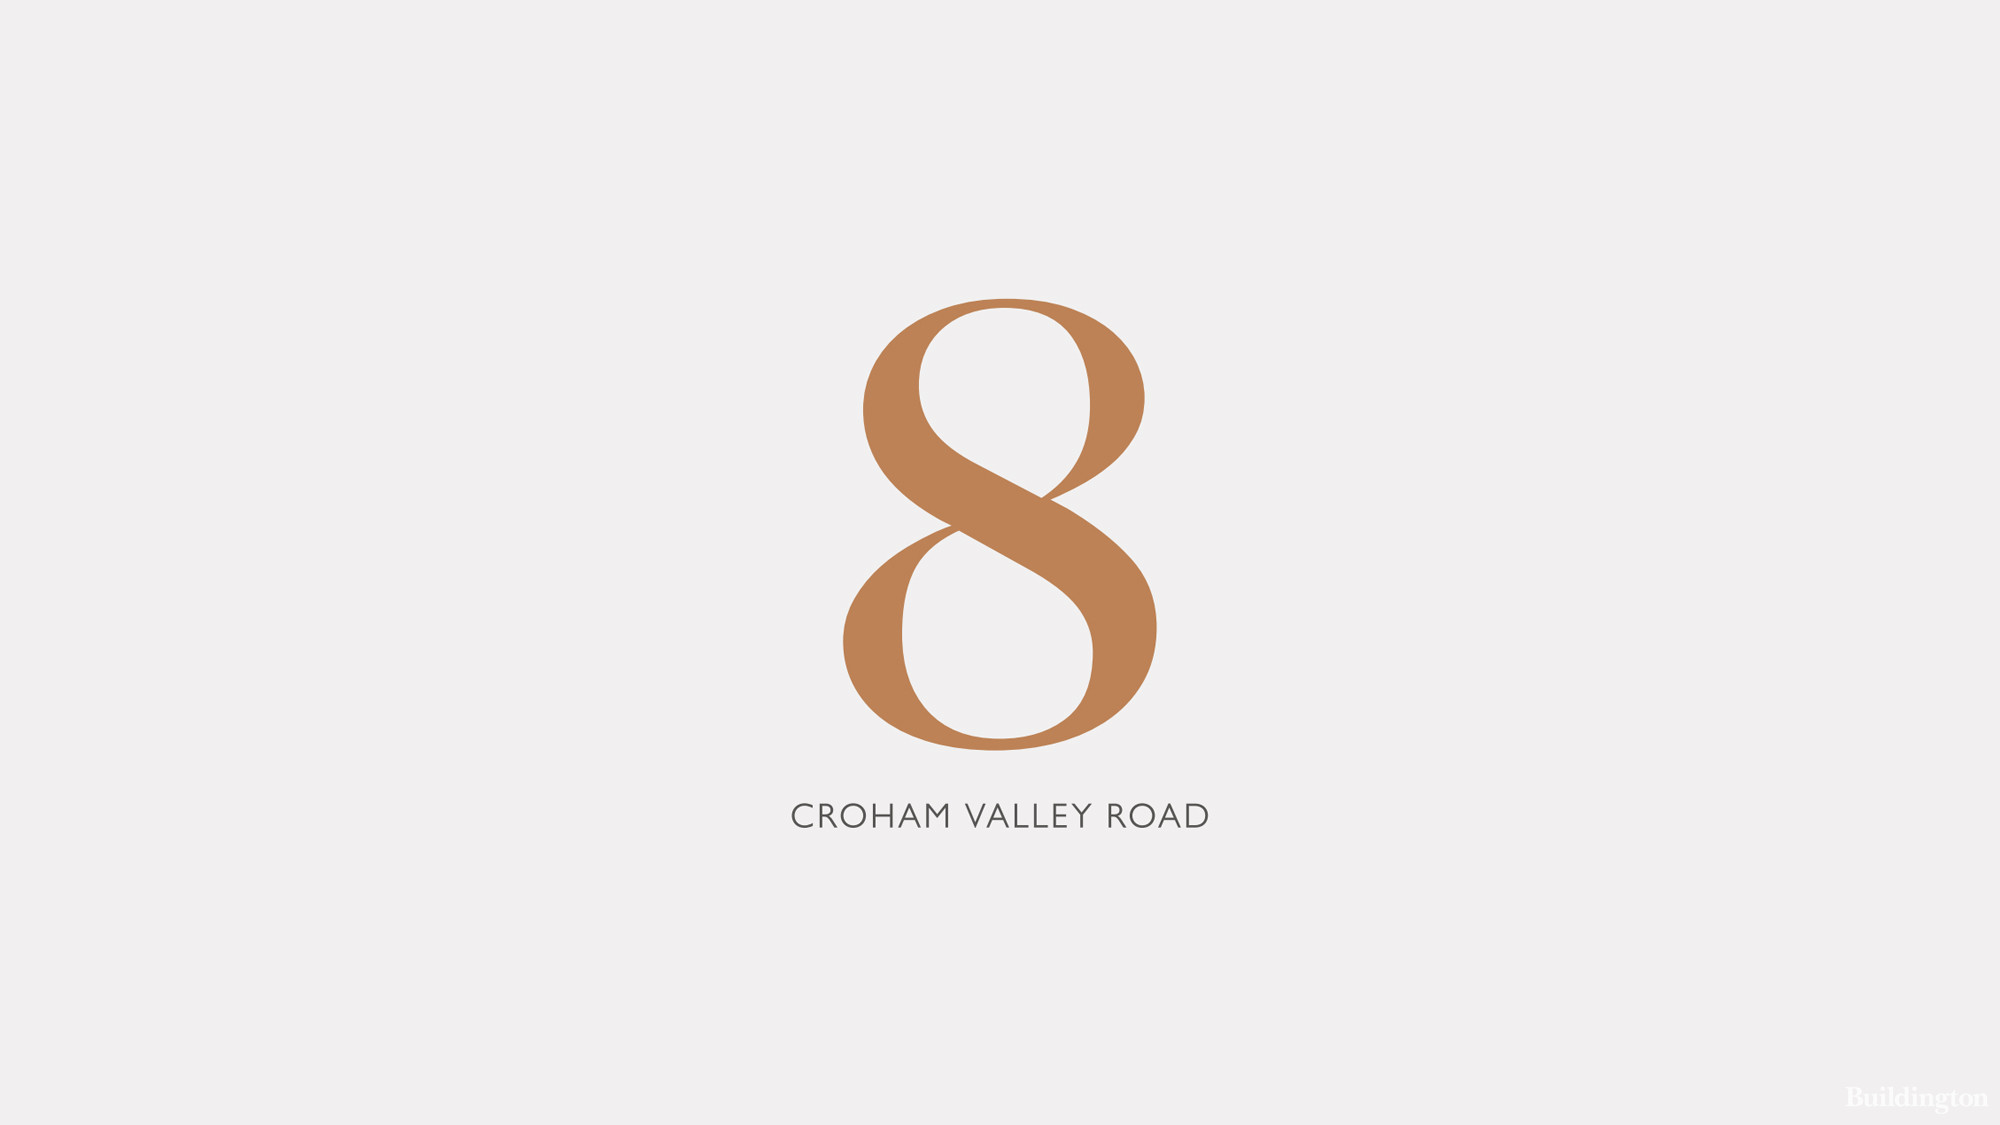 8 Croham Valley Road development logo.